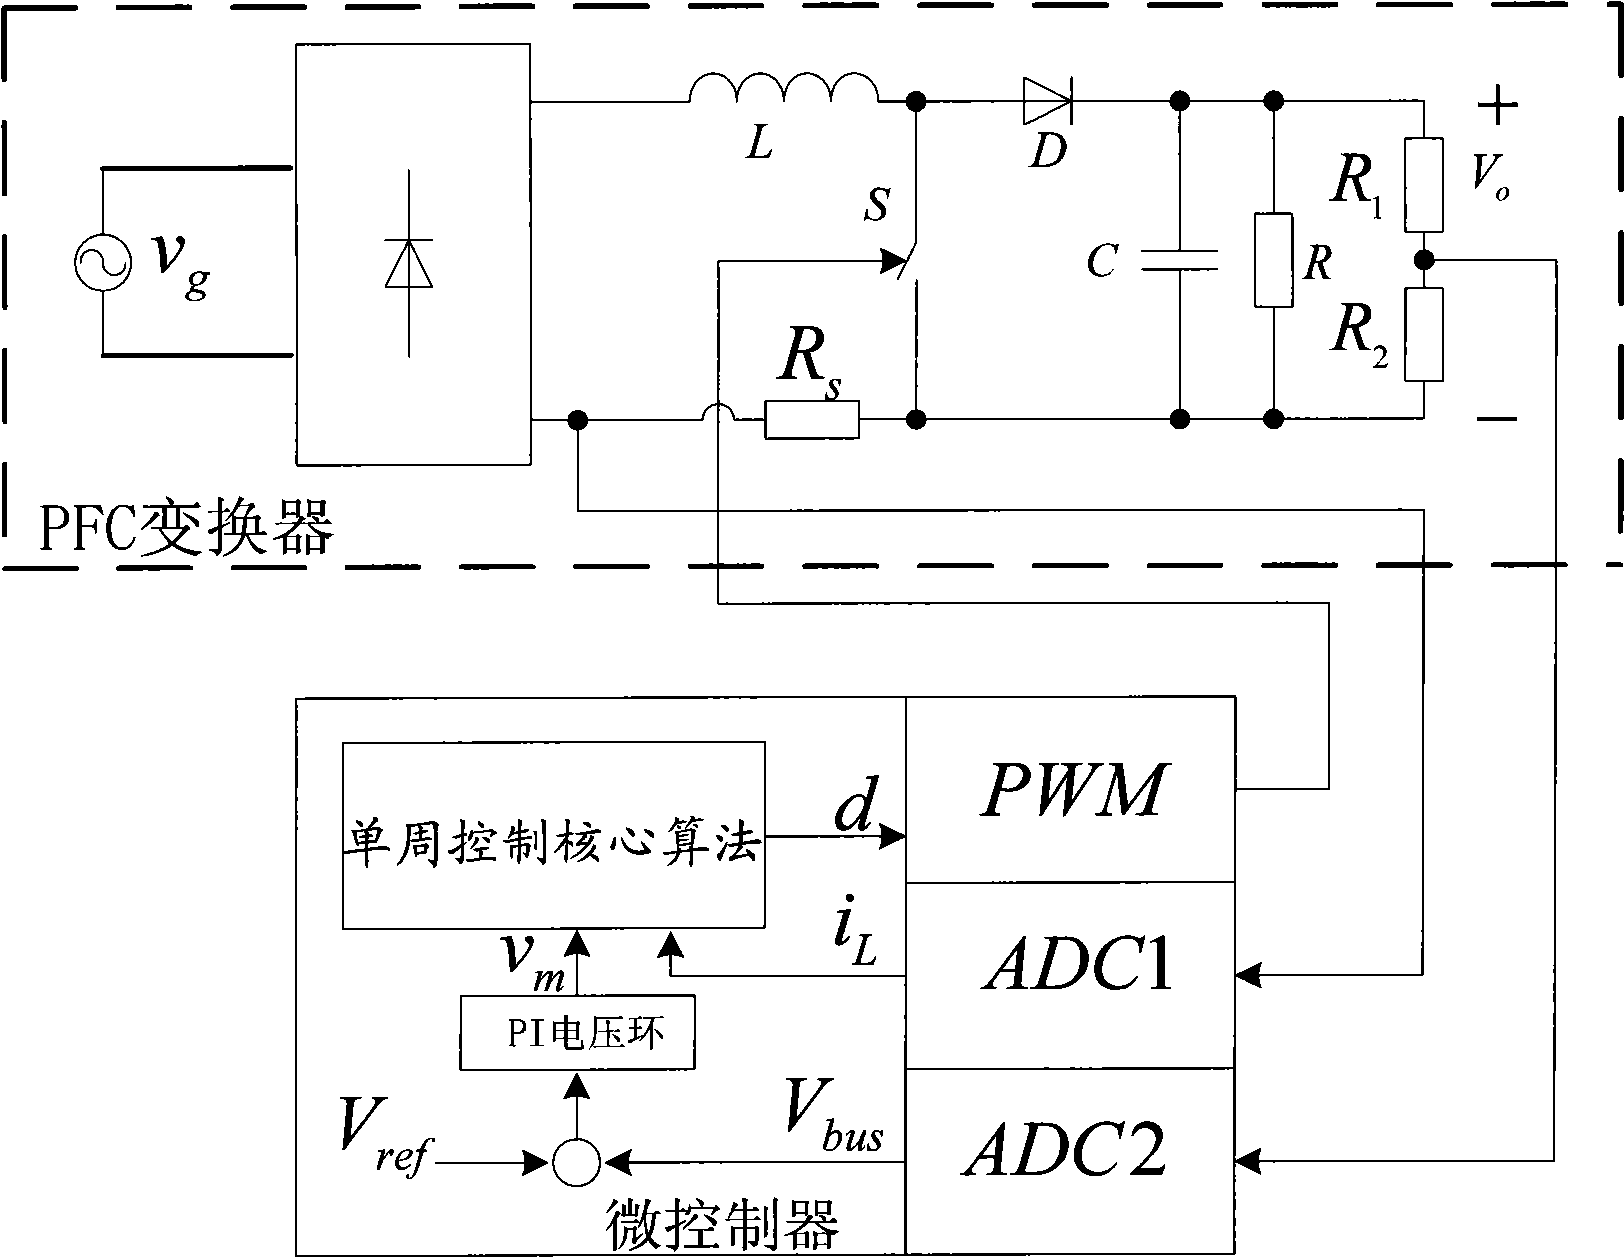 Digital monocyclic control method of PFC converter